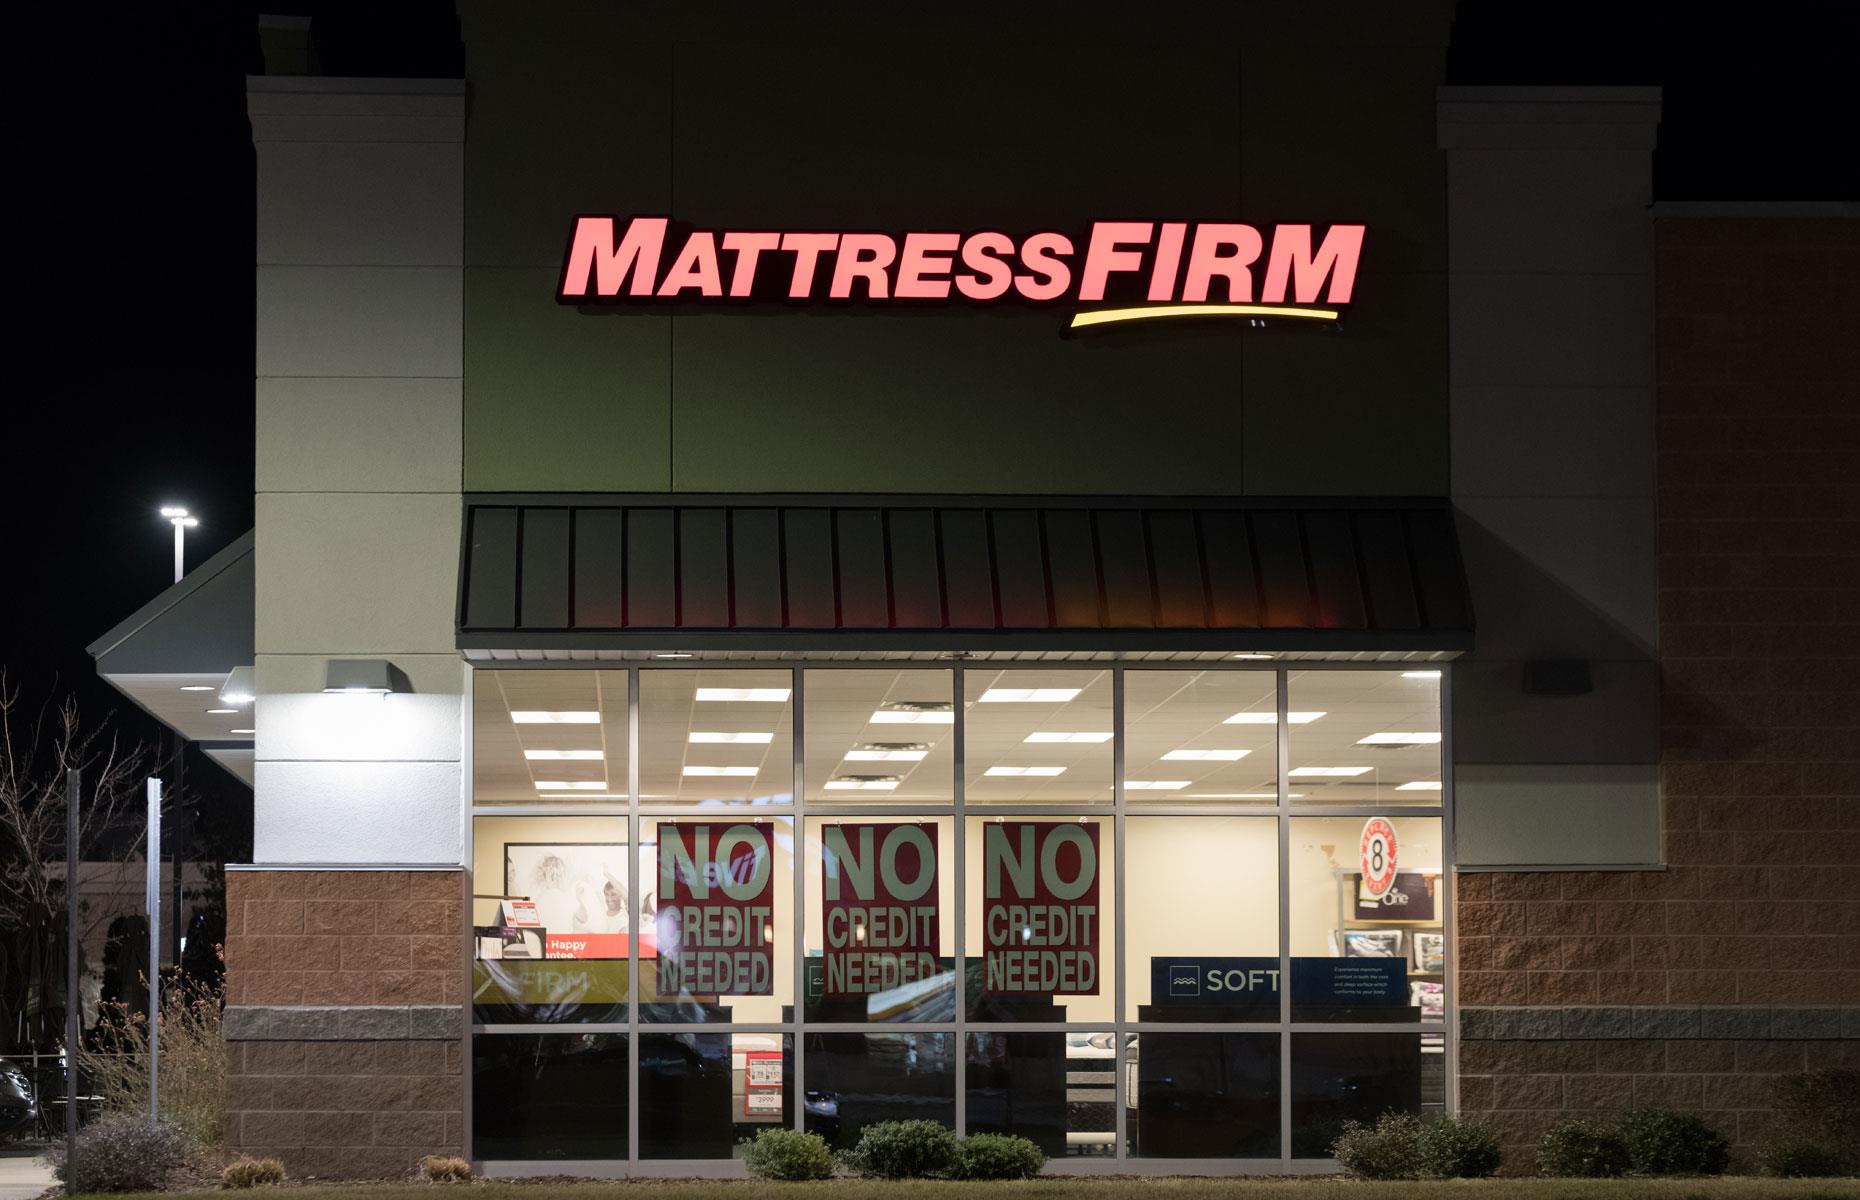 Mattress Firm: up to 700 stores